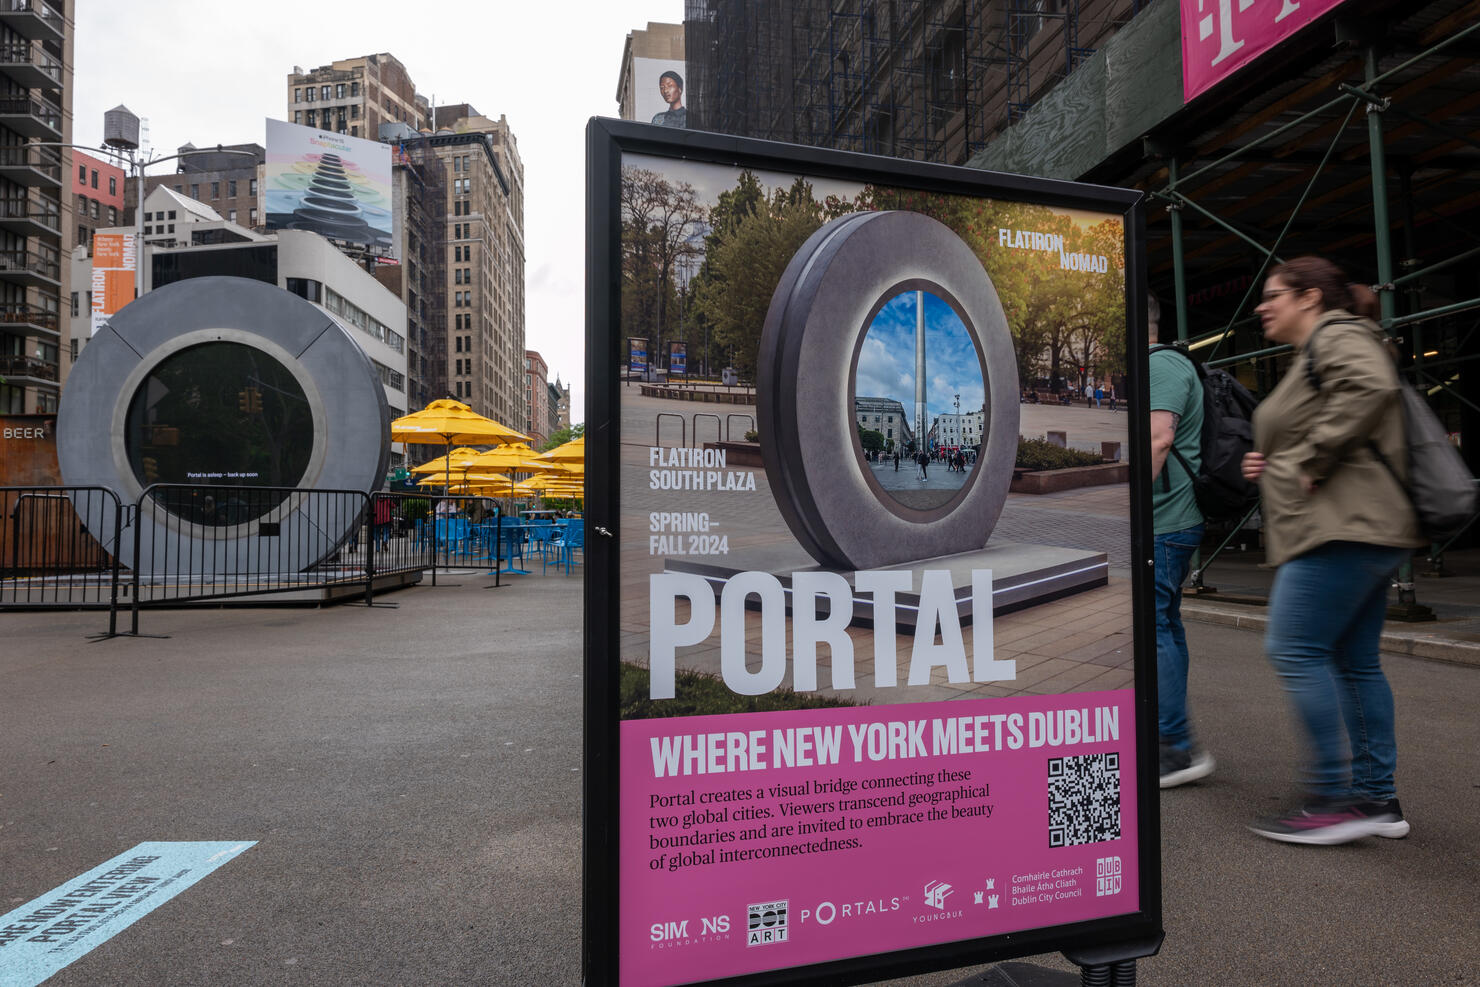 Video "Portal" Between New York And Dublin Shut Down After Lewd Behavior